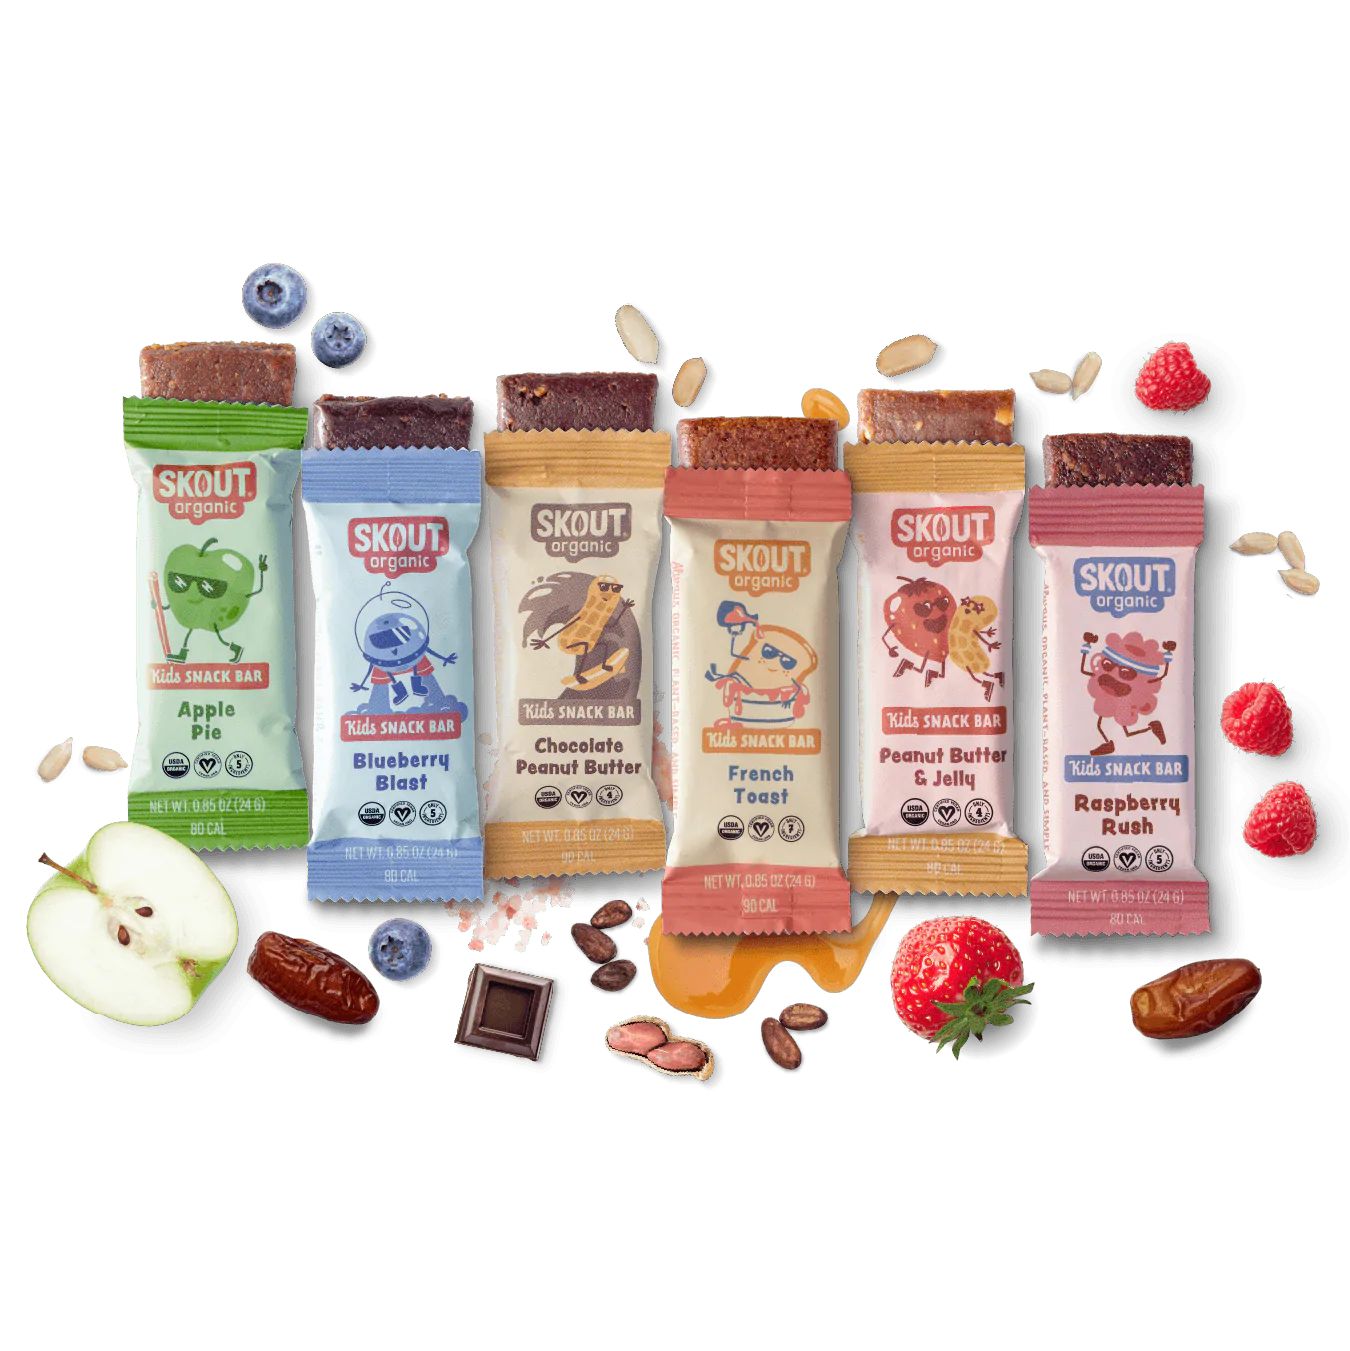 Skout Organic Chocolate Cherry Protein Bar | Skout Organic